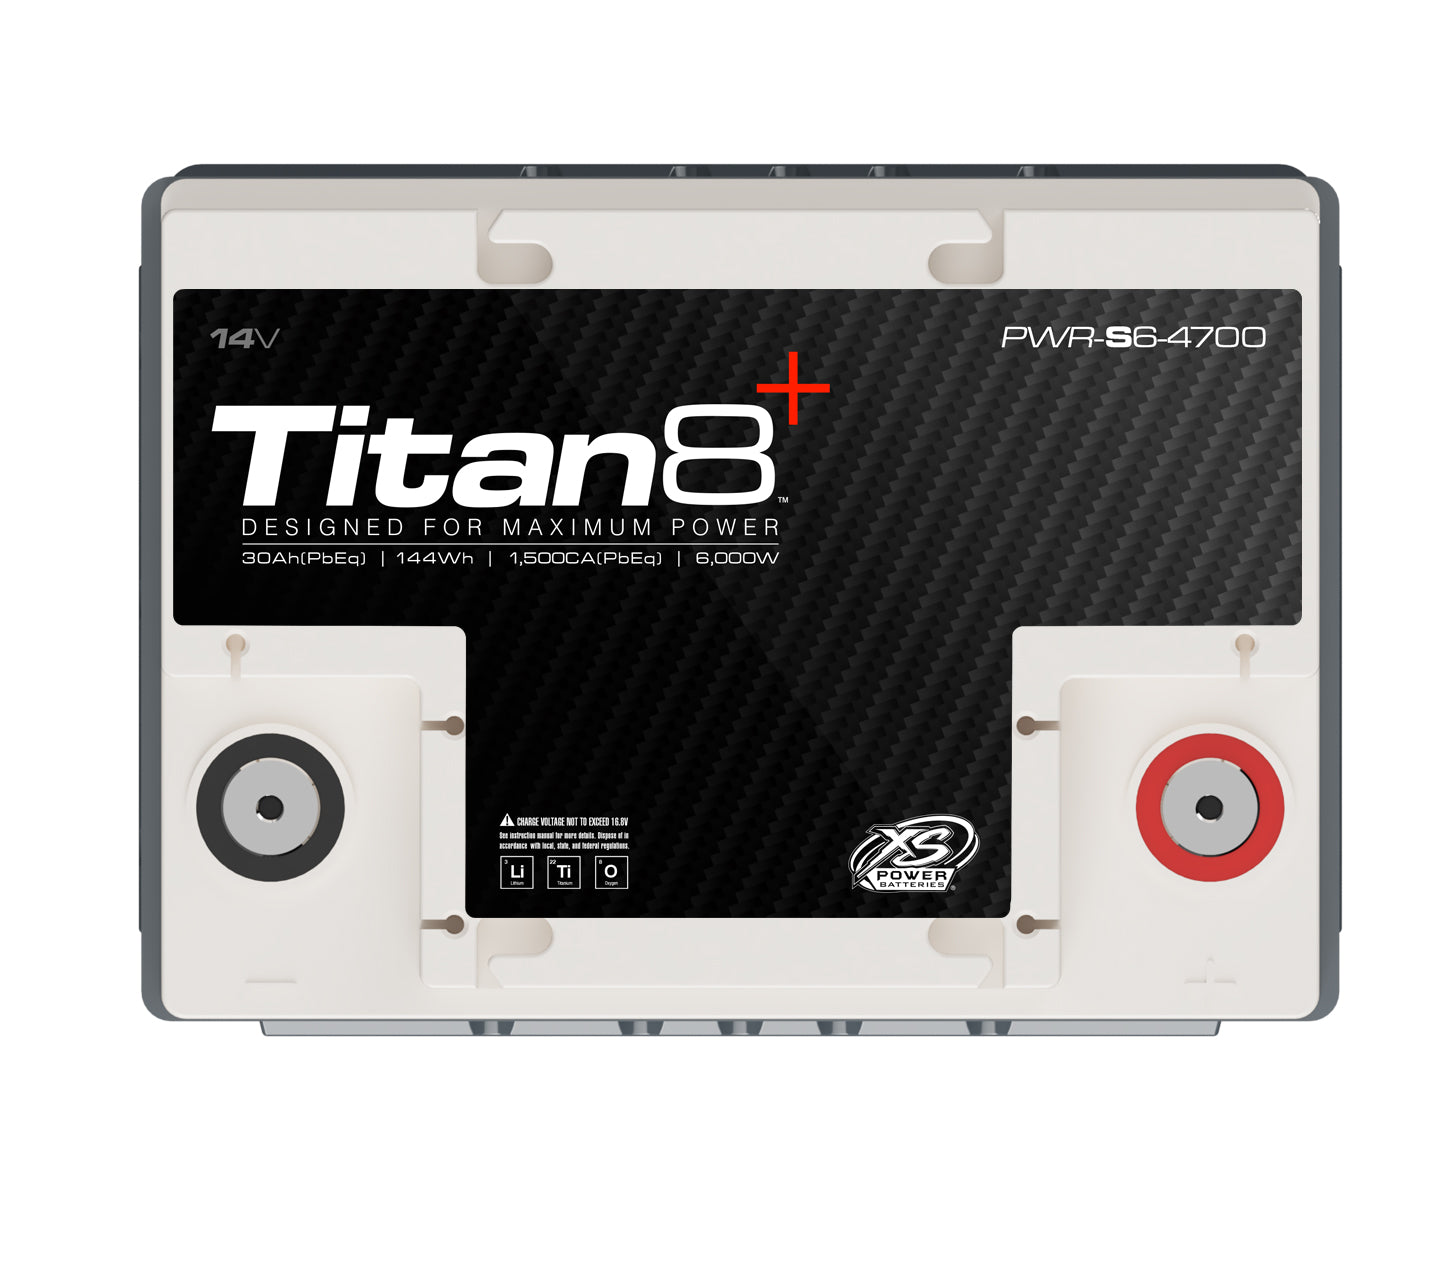 PWR-S6-4700 XS Power Titan8 14VDC Group 47 Lithium LTO Car Audio Vehicle Battery 5000W 144Wh